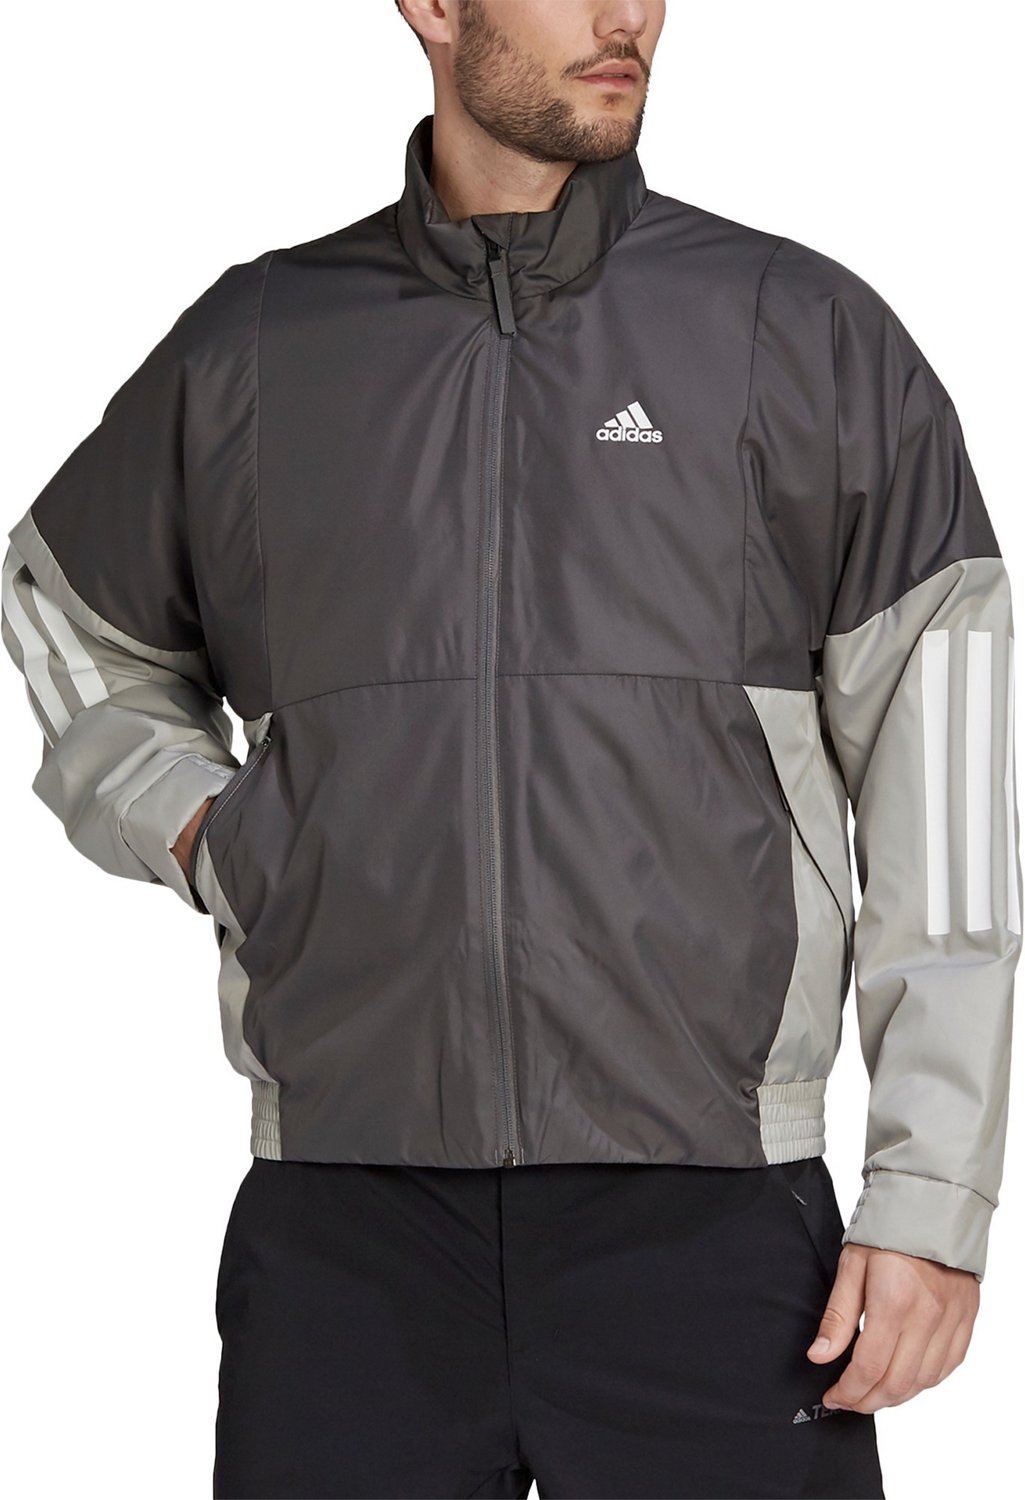 academy sports adidas jacket